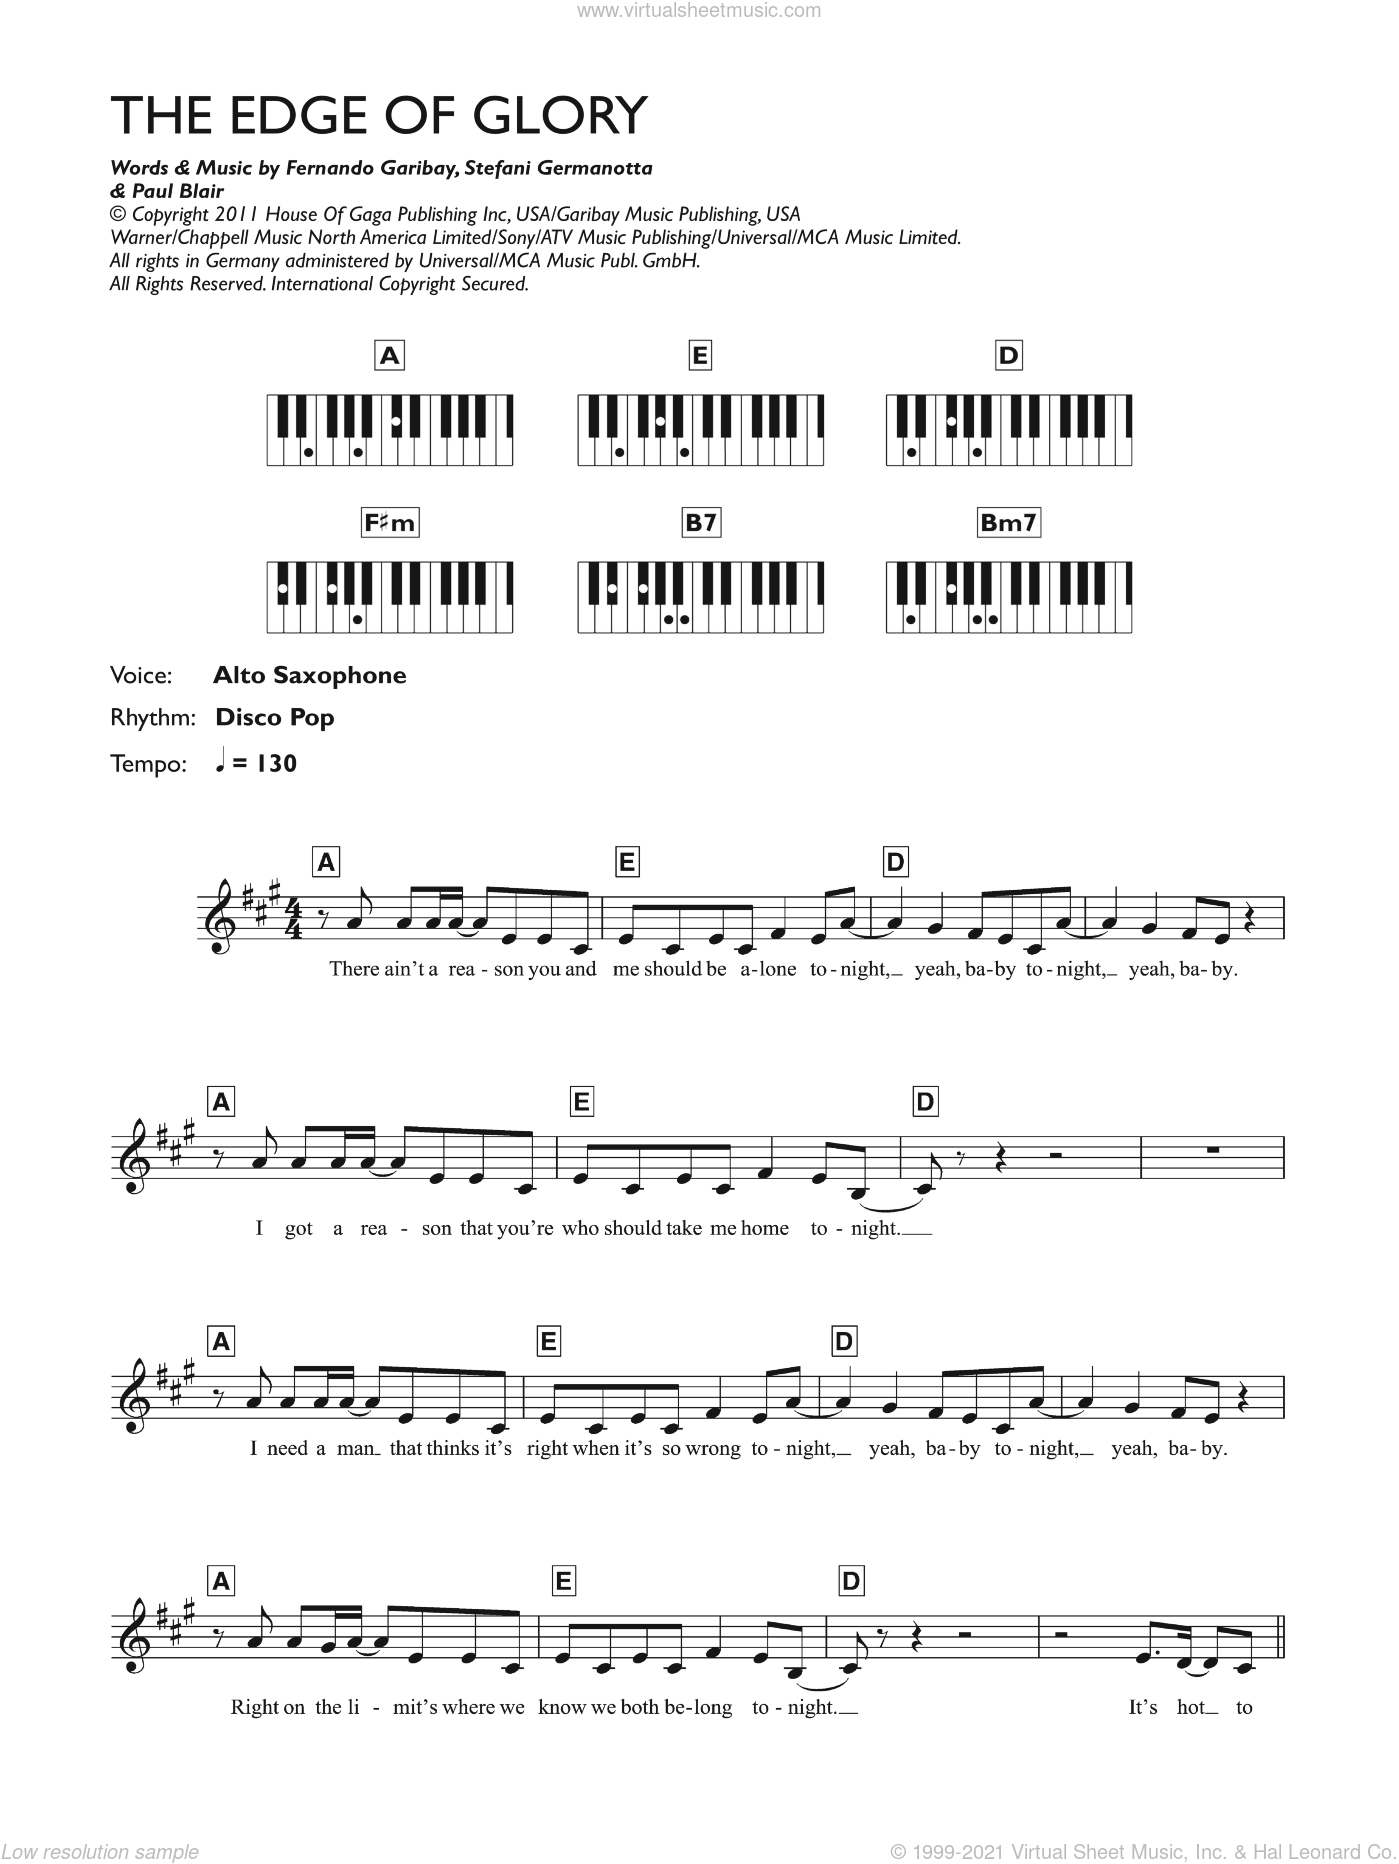 Gaga The Edge Of Glory Sheet Music Intermediate For Piano Solo Chords Lyrics Melody